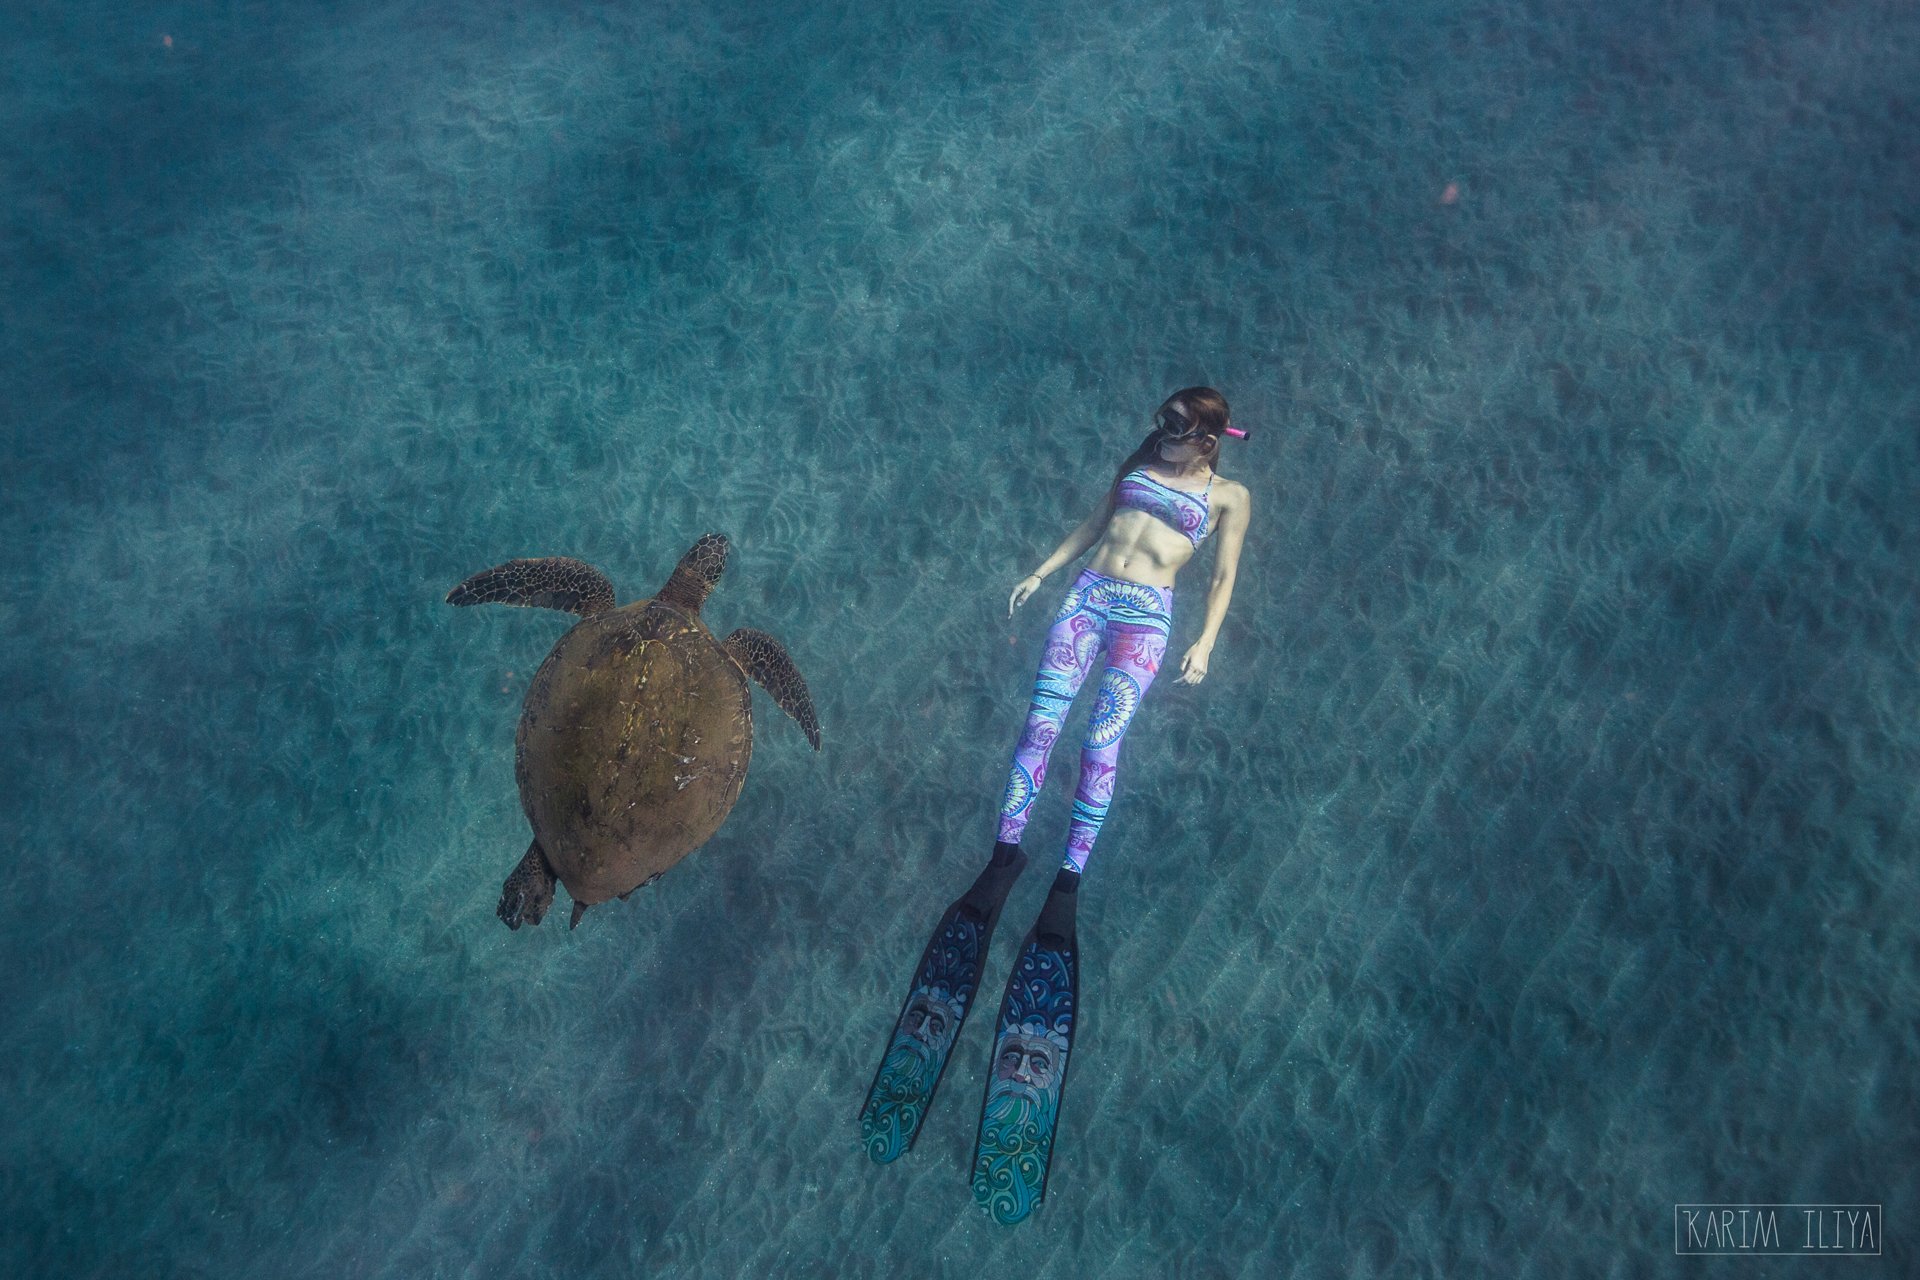 karim-iliya-turtle-underwater-freediving-photography.jpeg